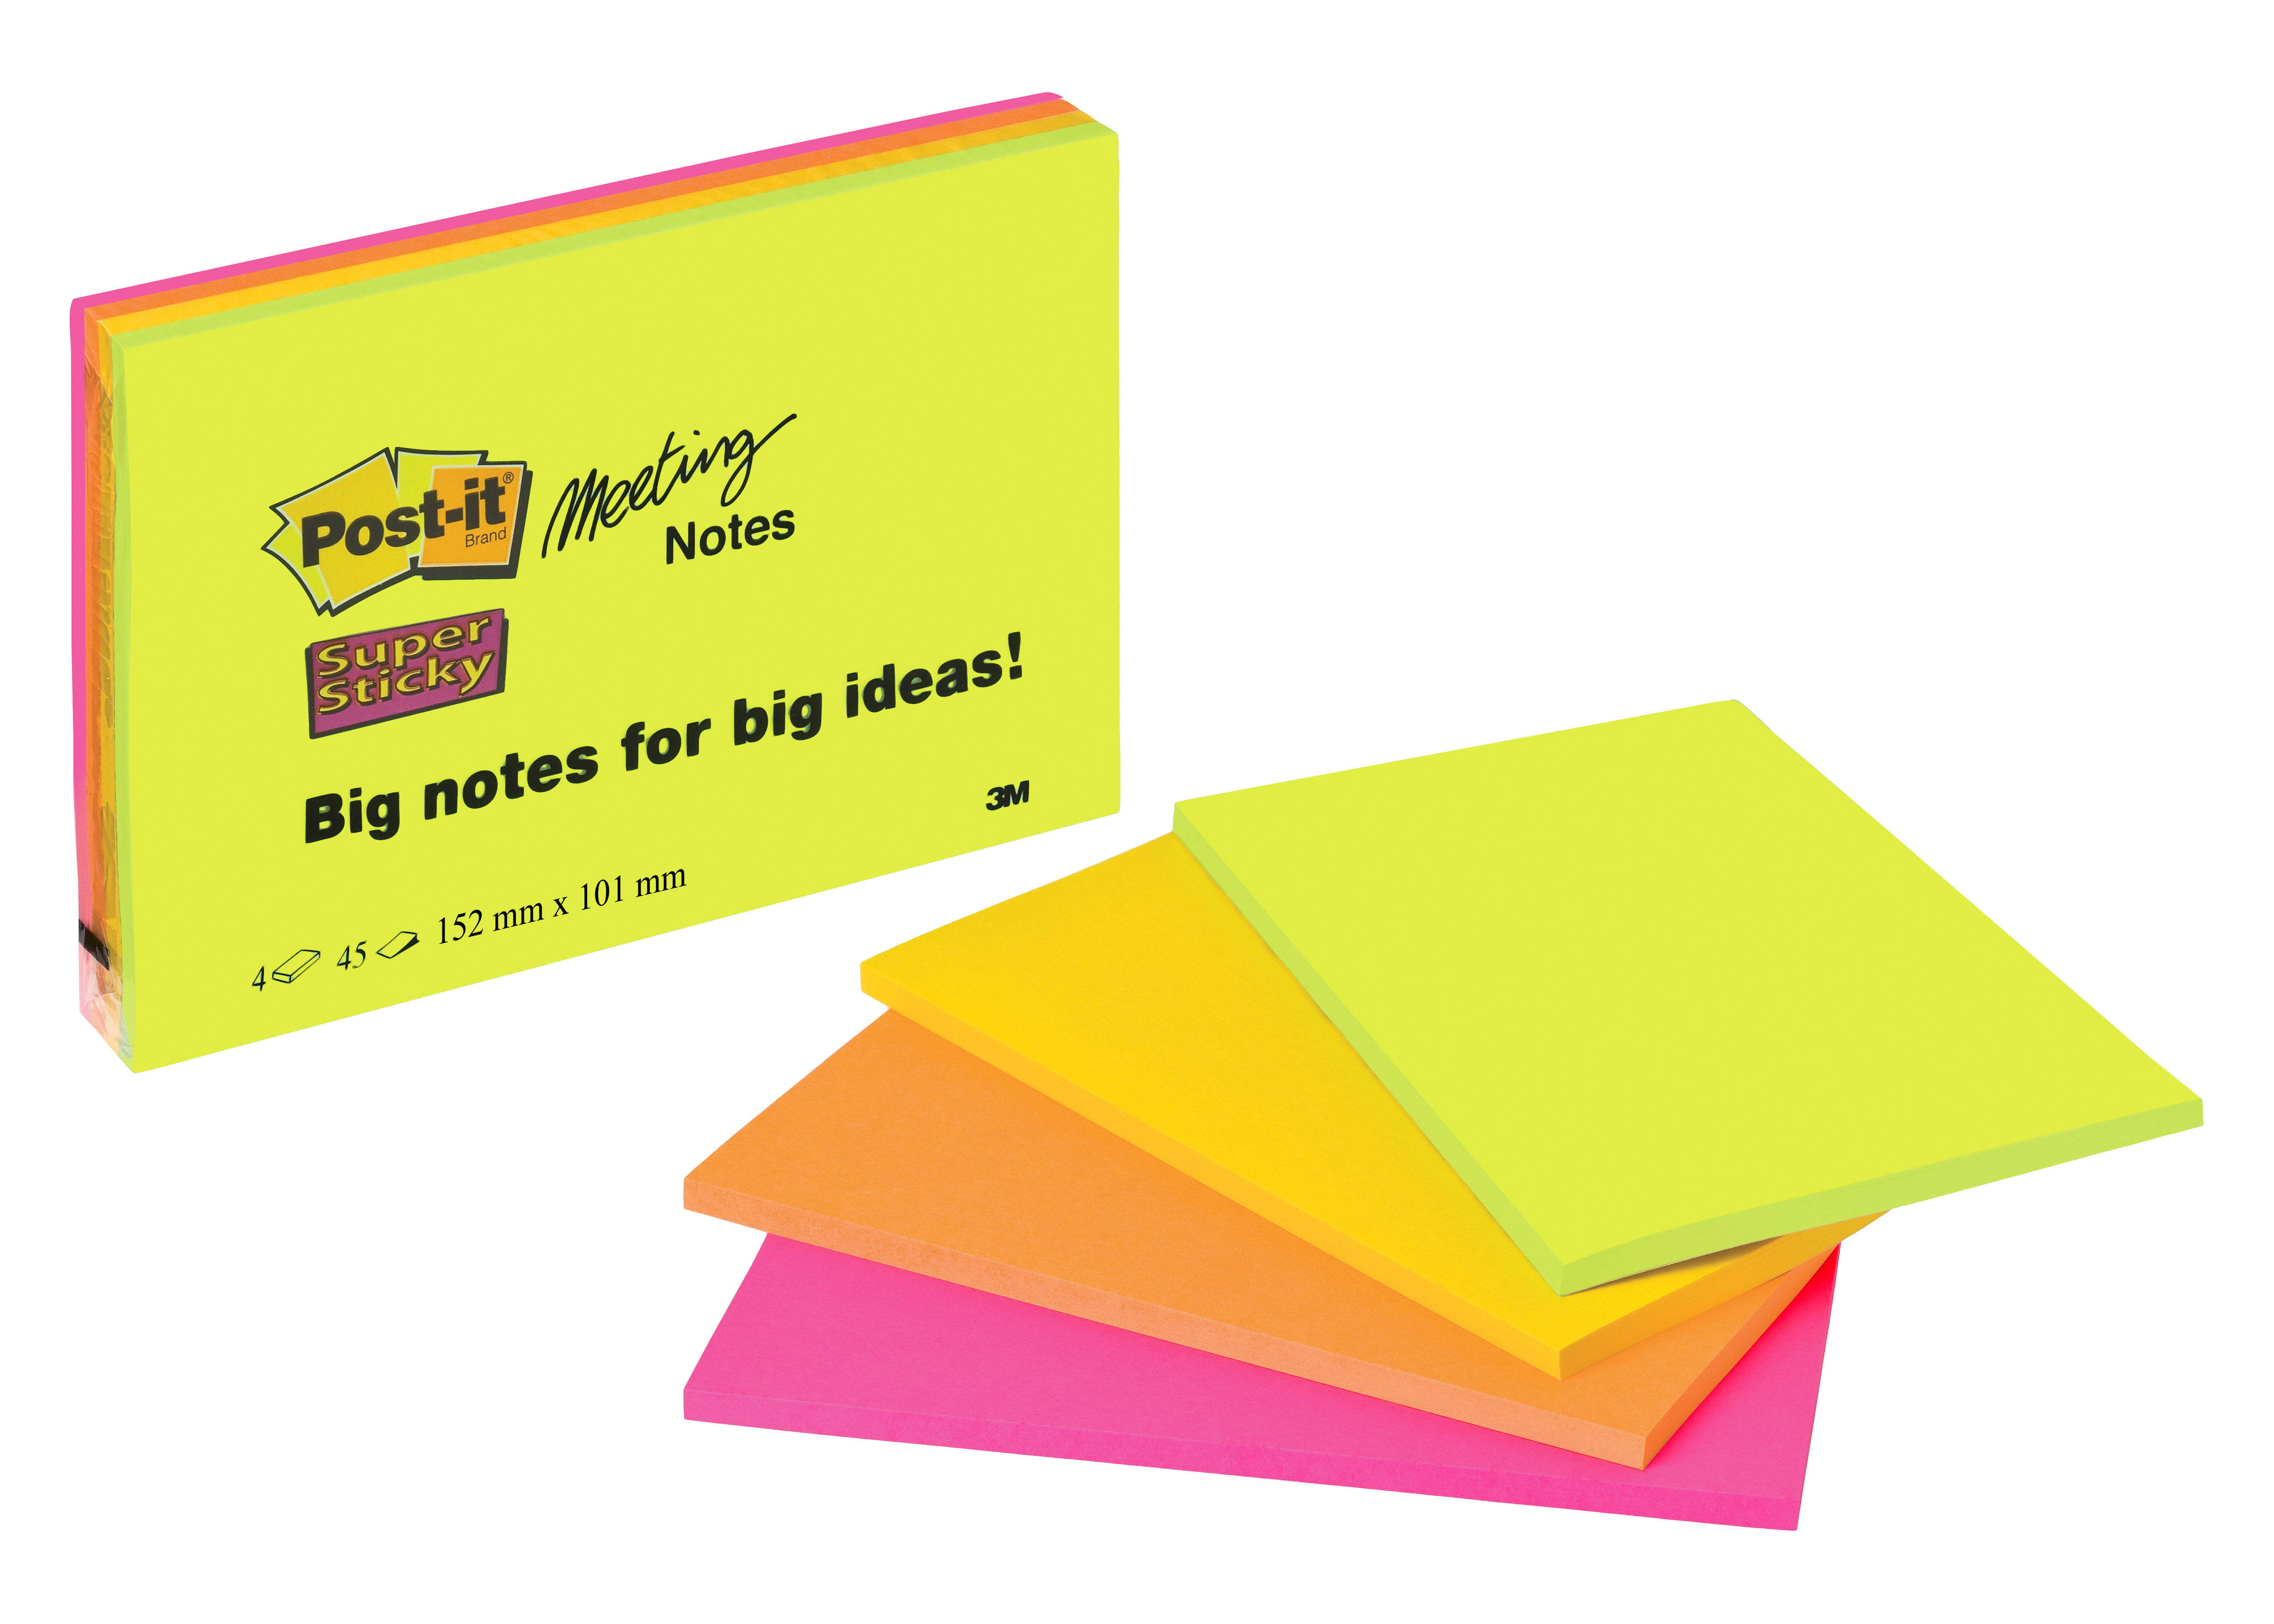 POST-IT Super Sticky Big Notes 4x45 f. 6445-4SS 4 couleurs ass. 152x101mm